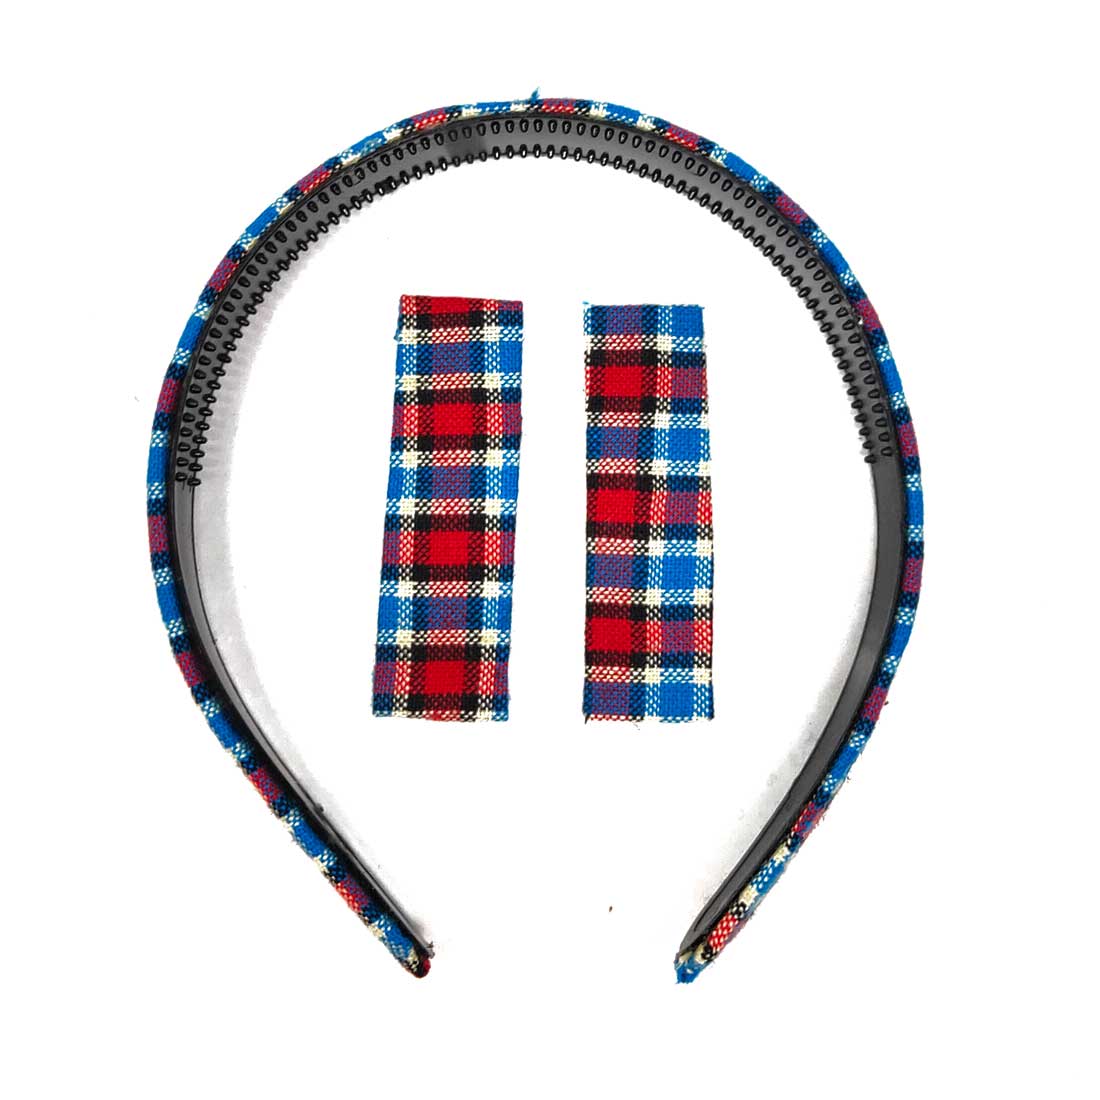 Anokhi Ada Handmade Fabric on Plastic Hairbands / Headbands for Kids and Girls (Multi-Colour, Pack of 1) - 09-09H